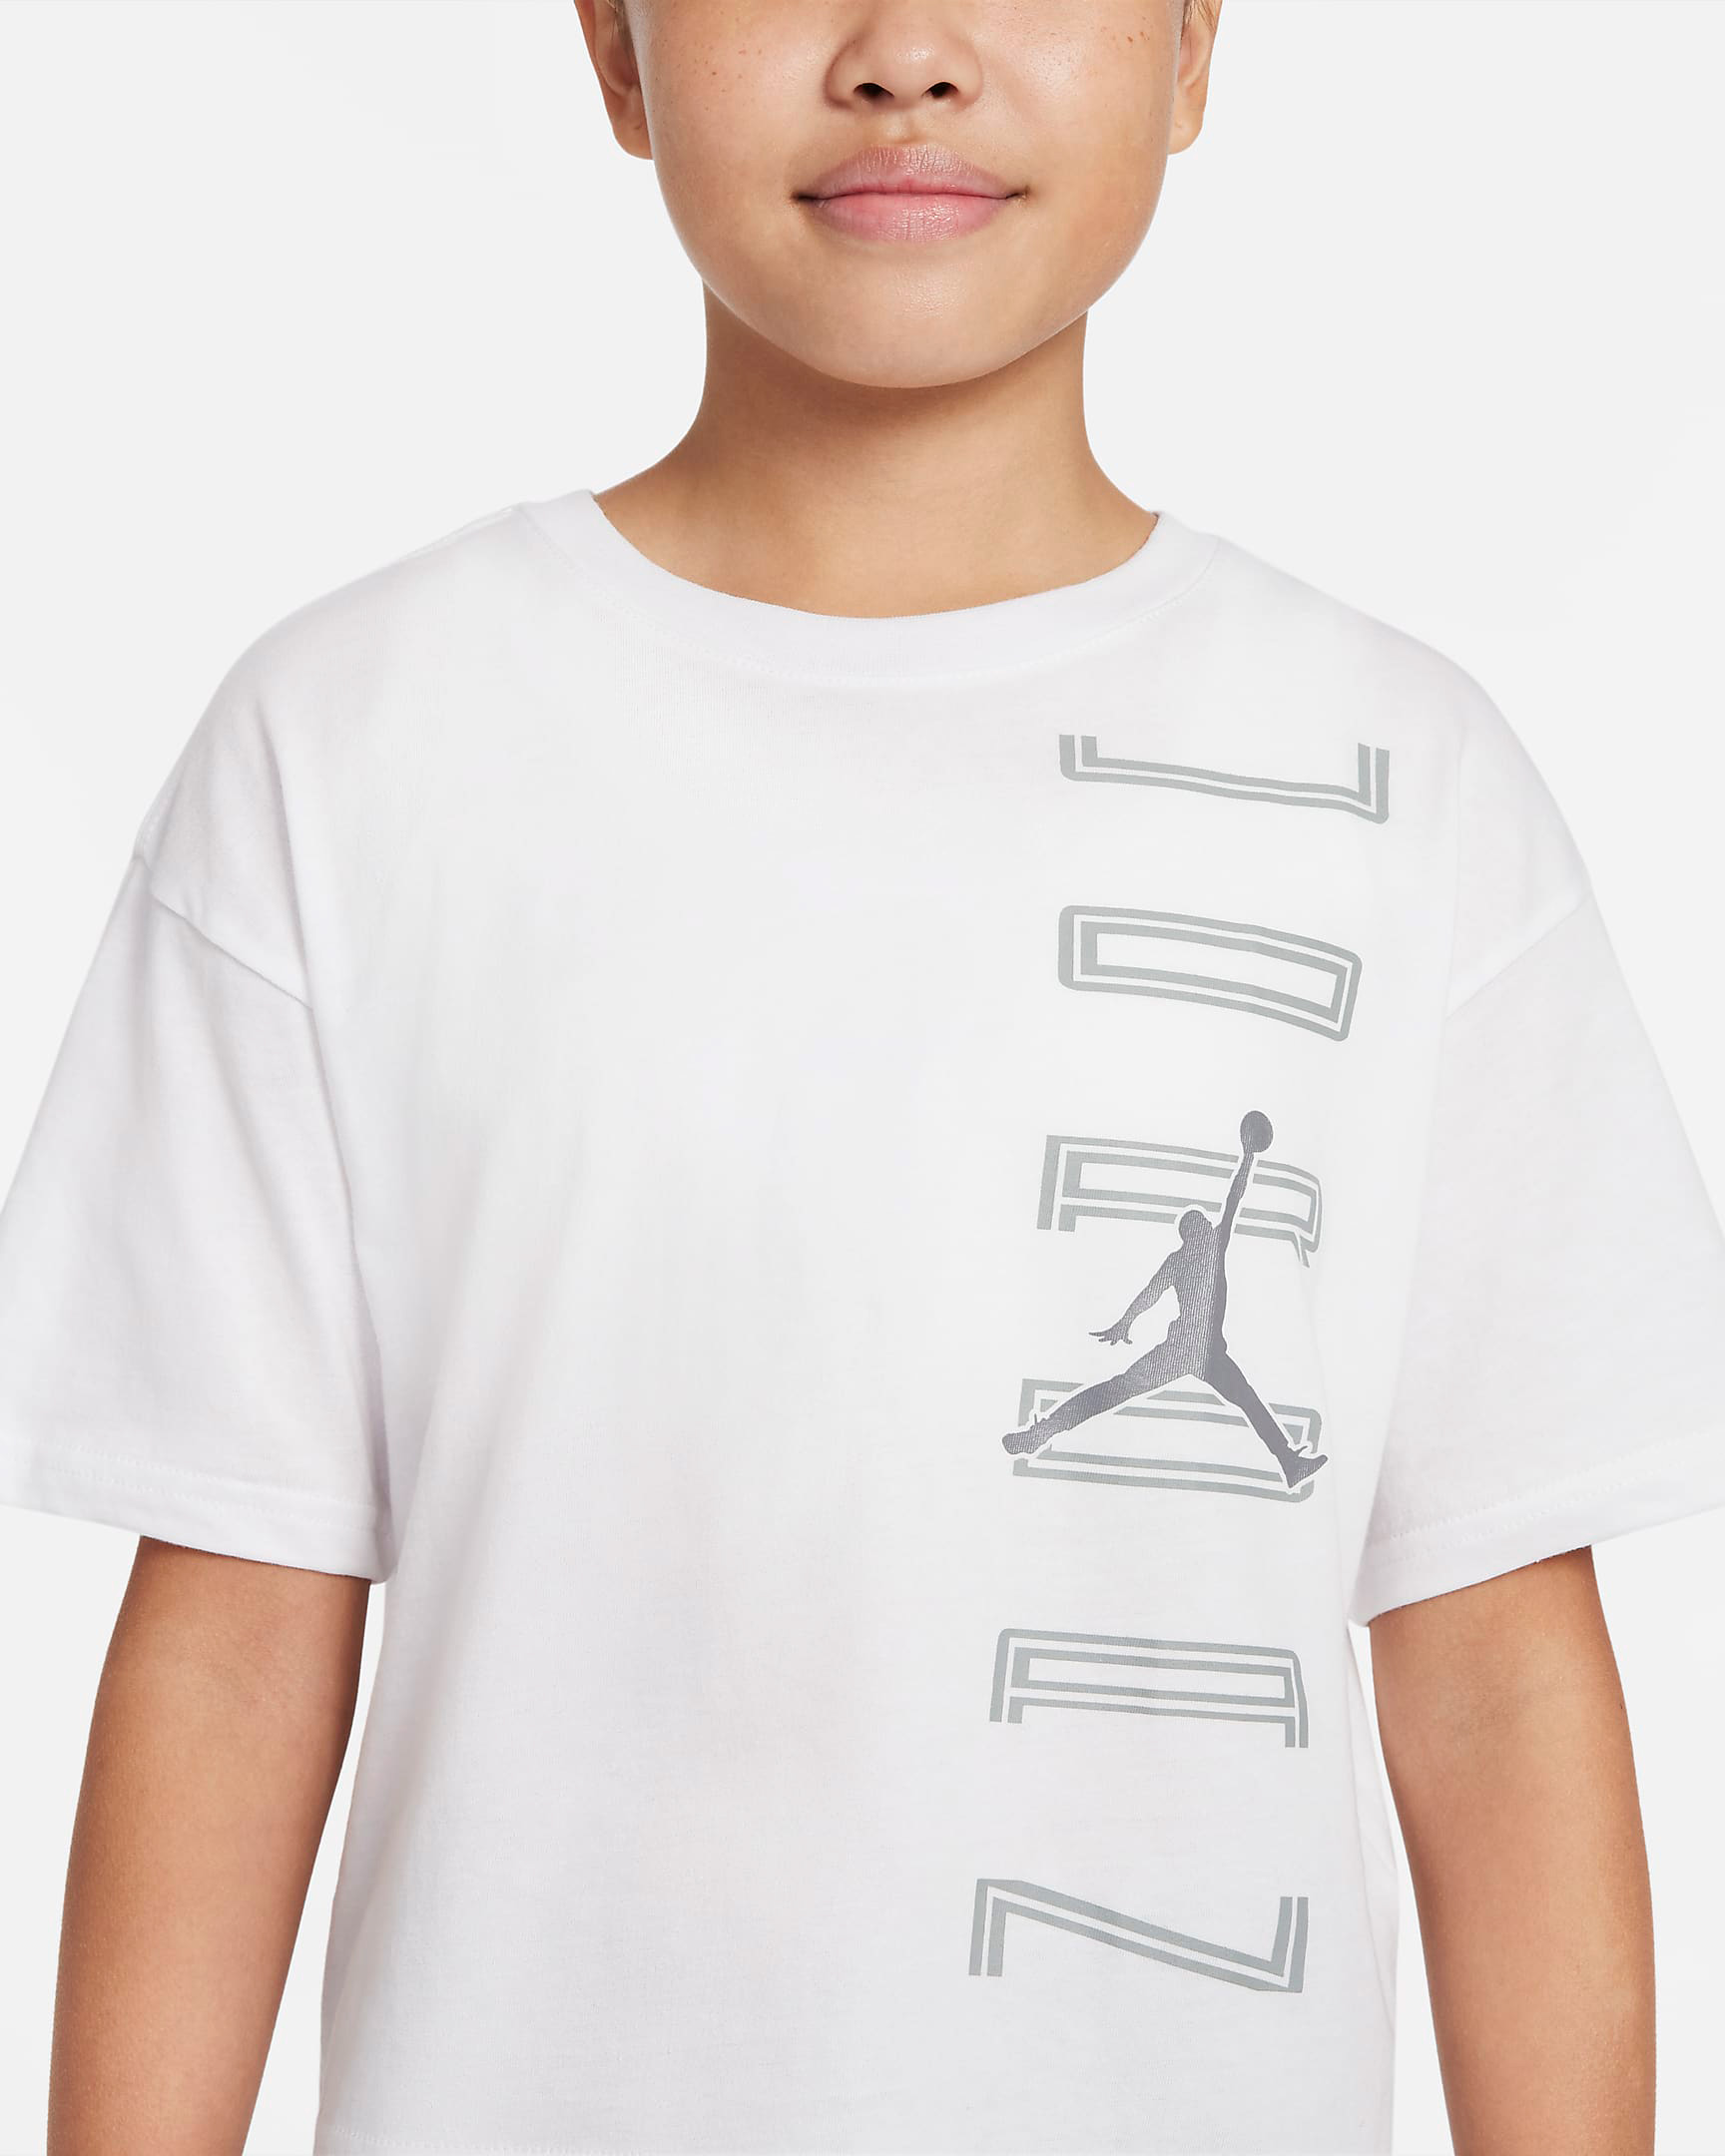 air-jordan-11-cool-grey-kids-girls-shirt-2